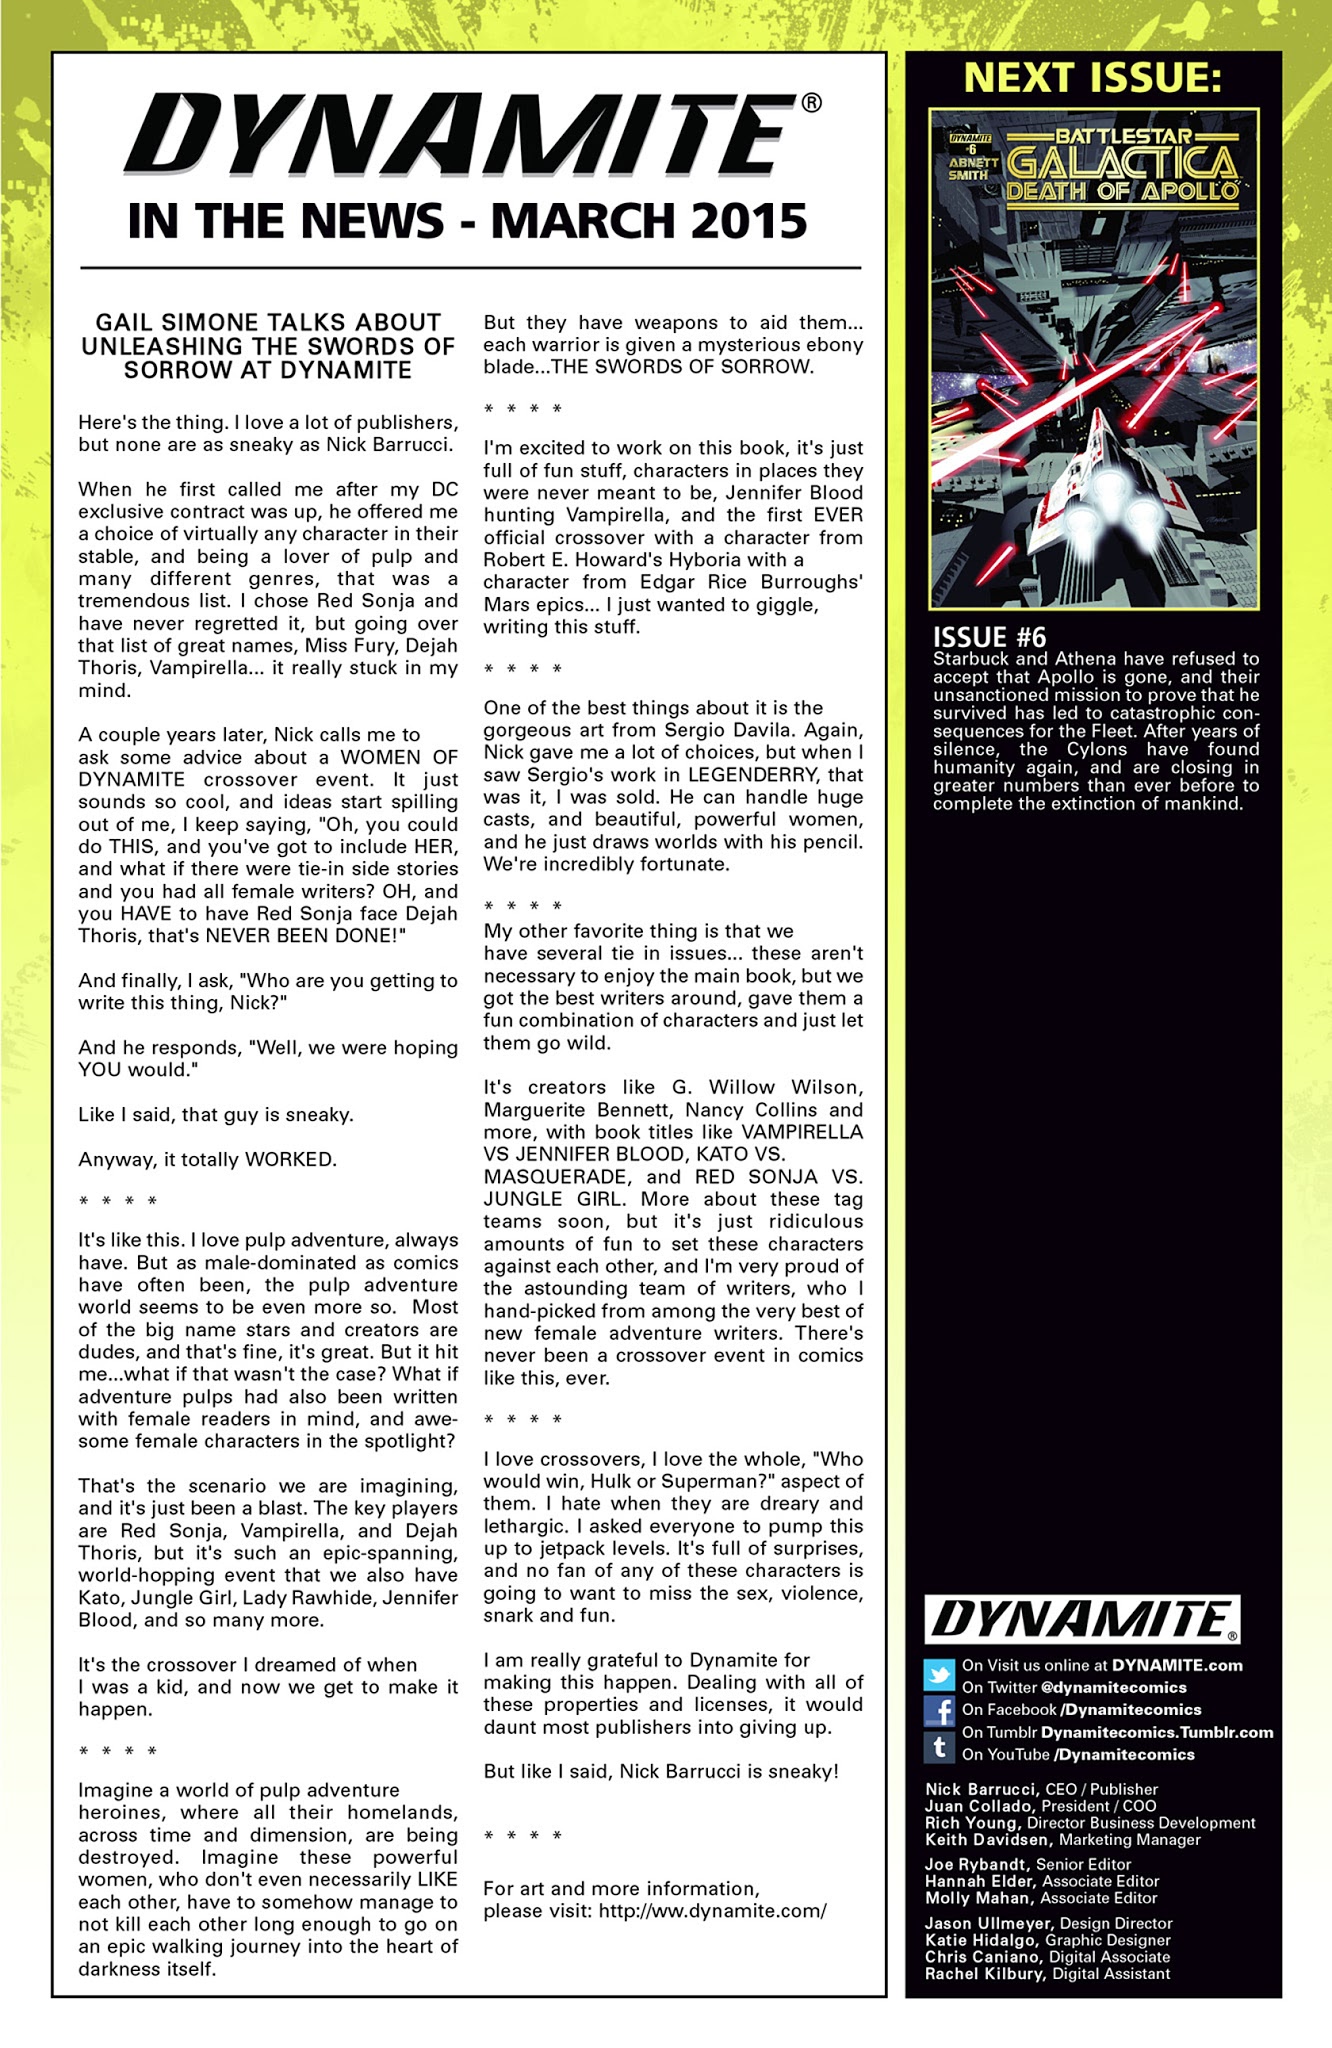 Read online Classic Battlestar Galactica: The Death of Apollo comic -  Issue #5 - 25